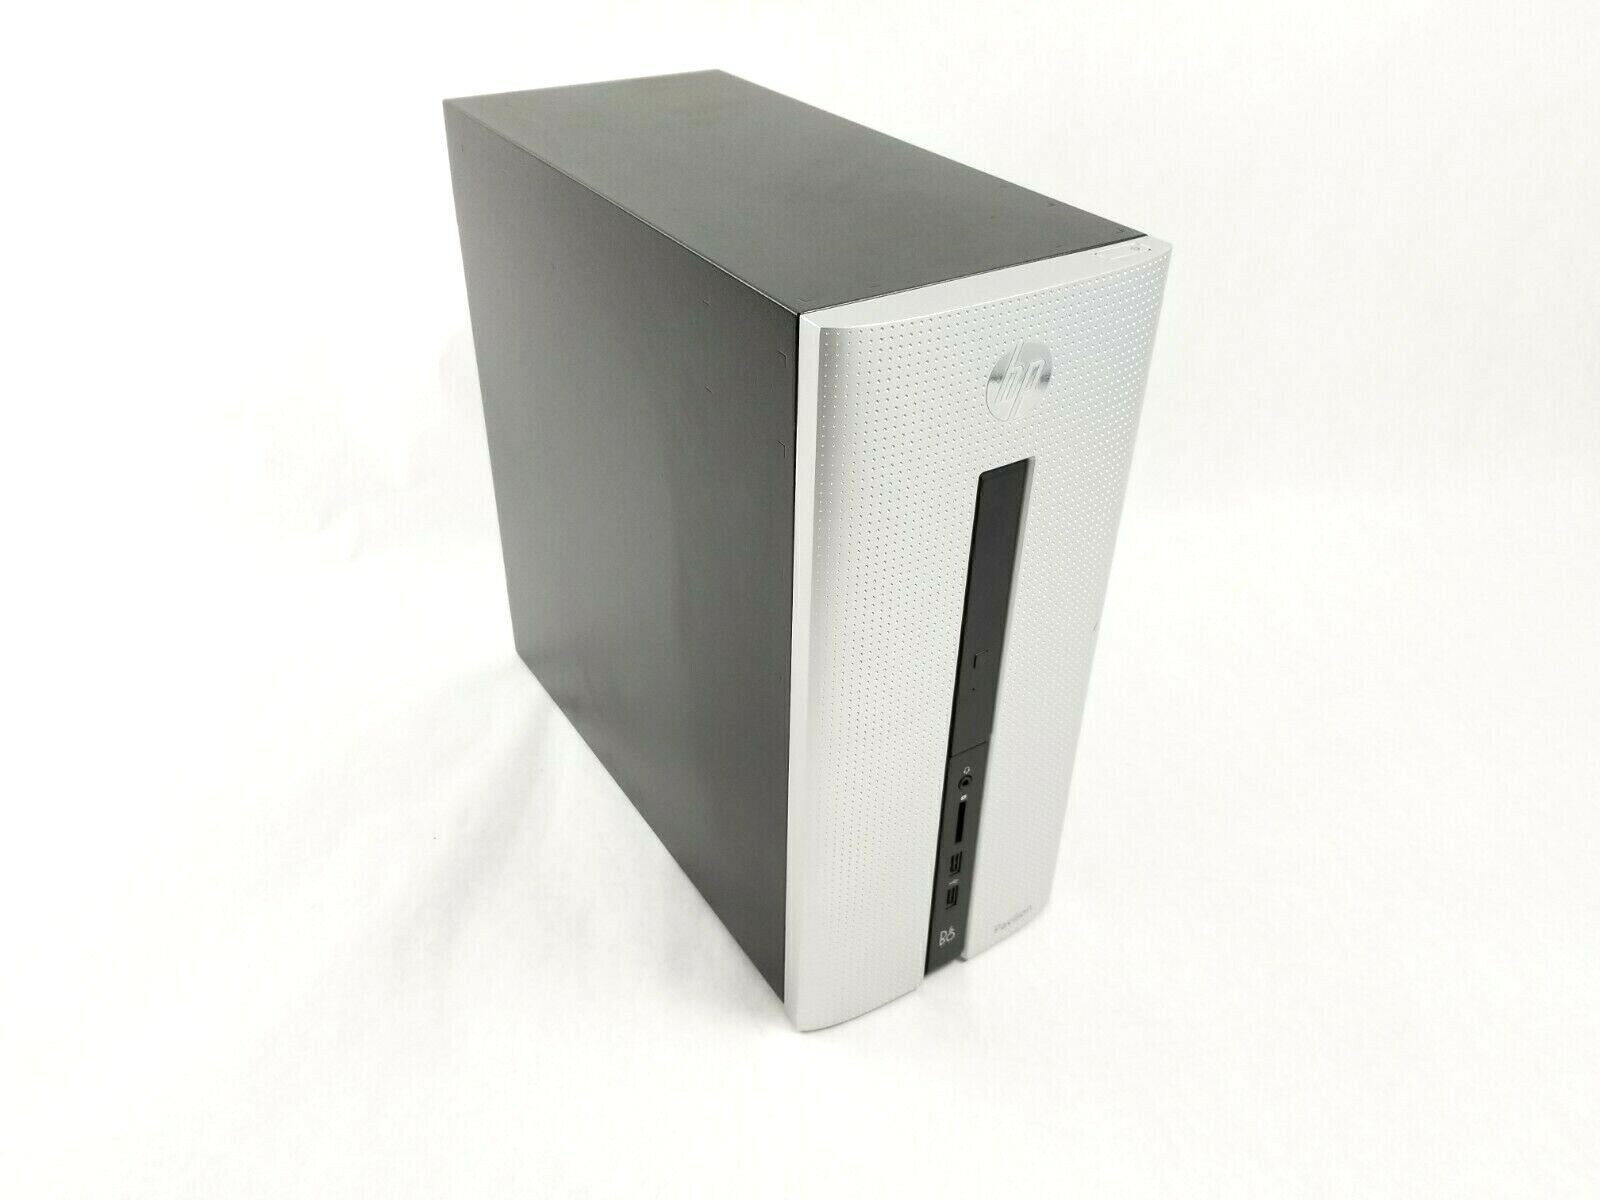 HP Pavilion Desktop 550-a114 MT AMD A8-6410 2GHz 8GB RAM No AC Adapter No HDD